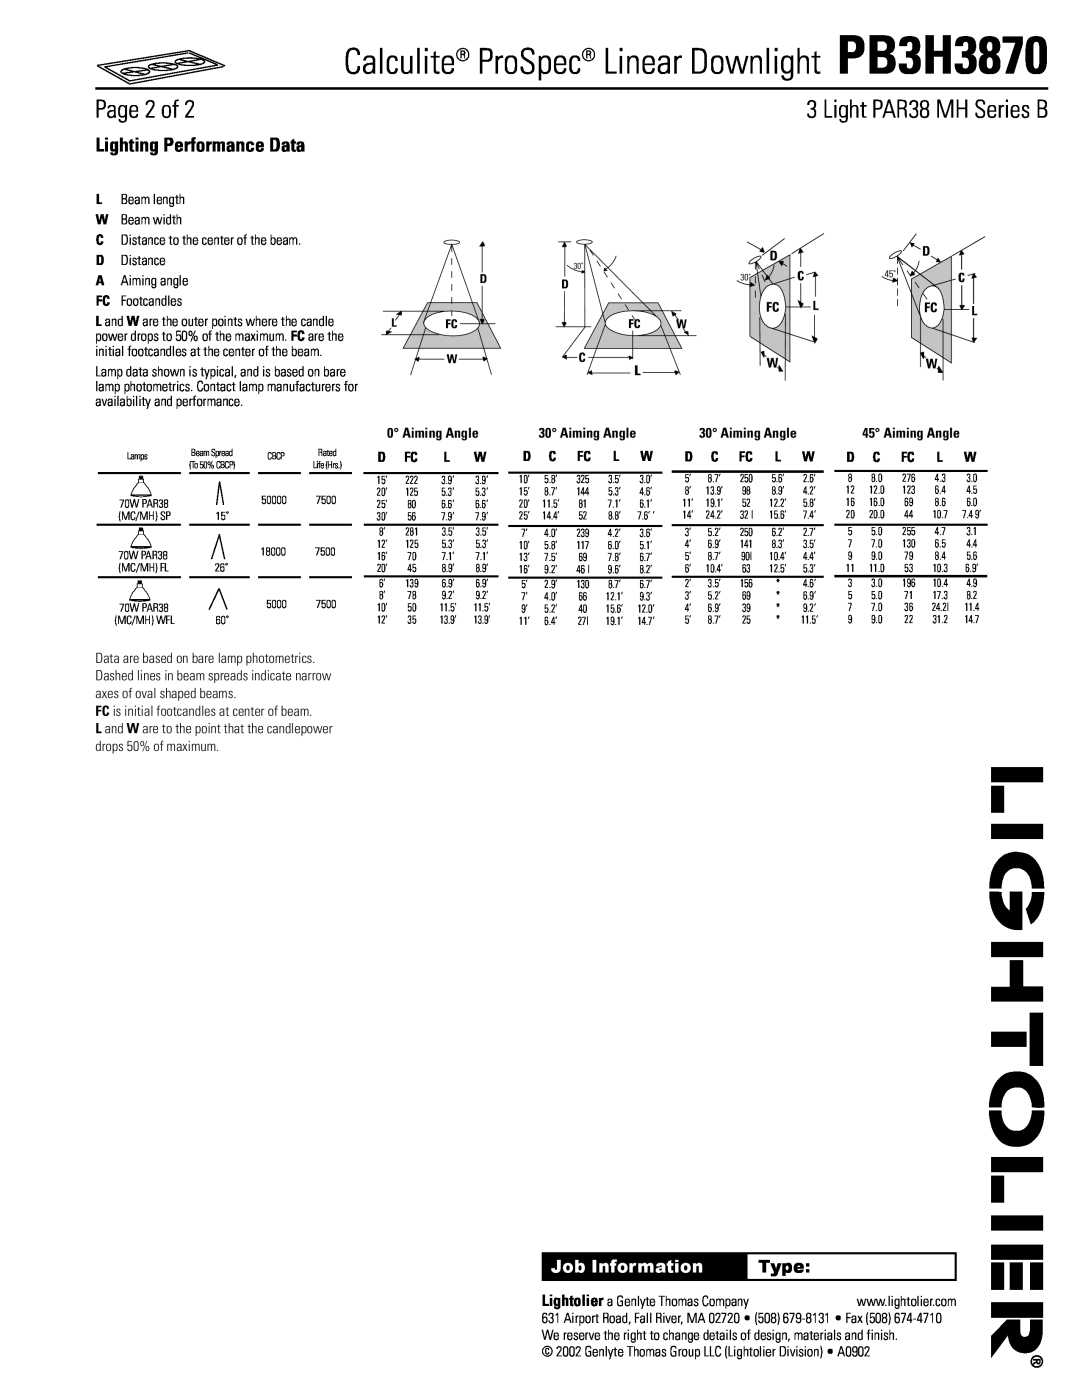 Lightolier Page 2 of, Lighting Performance Data, Calculite ProSpec Linear Downlight PB3H3870, Light PAR38 MH Series B 